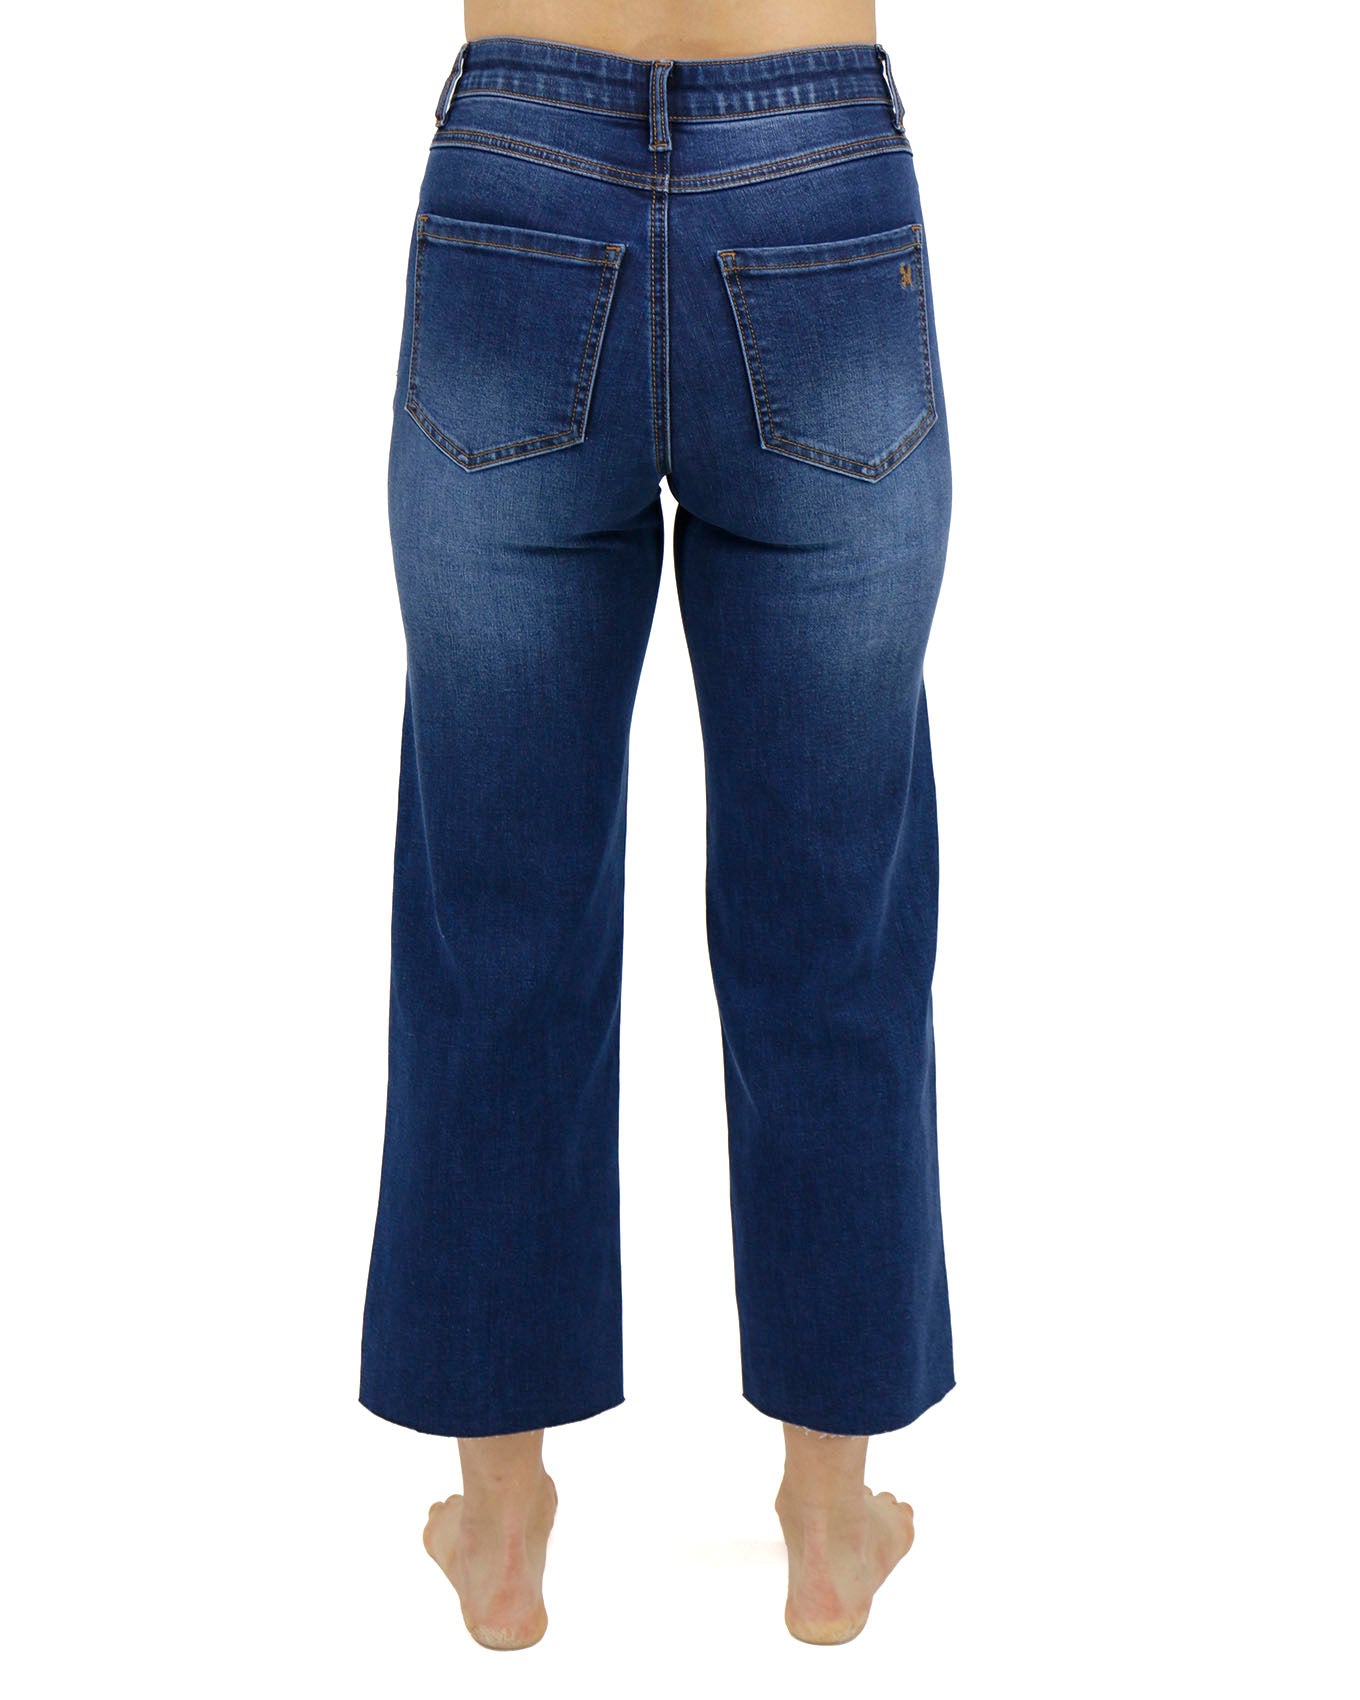 Back stock shot of Medium Dark Wash Cropped Wide Leg Waist Shaper Jeans